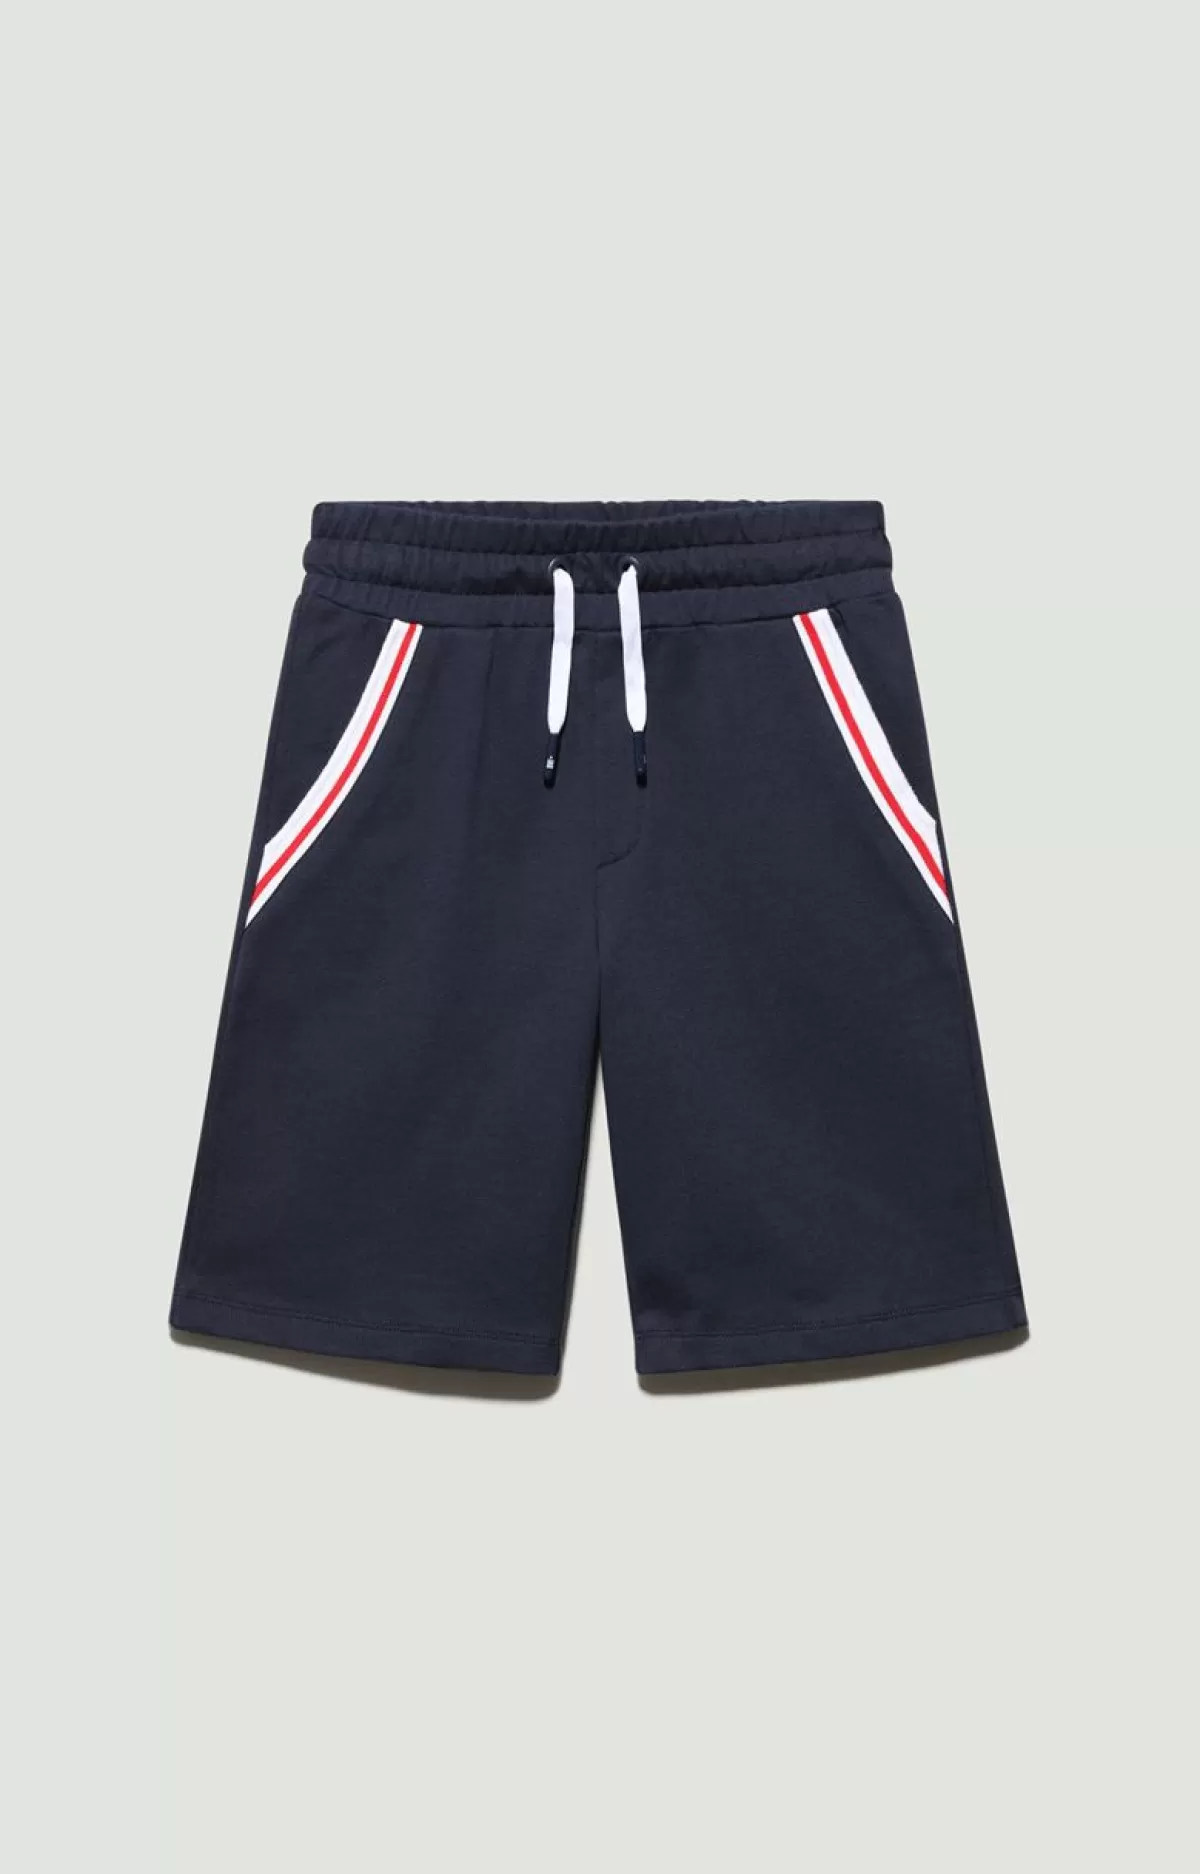 Bikkembergs Boys' Fleece Shorts Navy Flash Sale